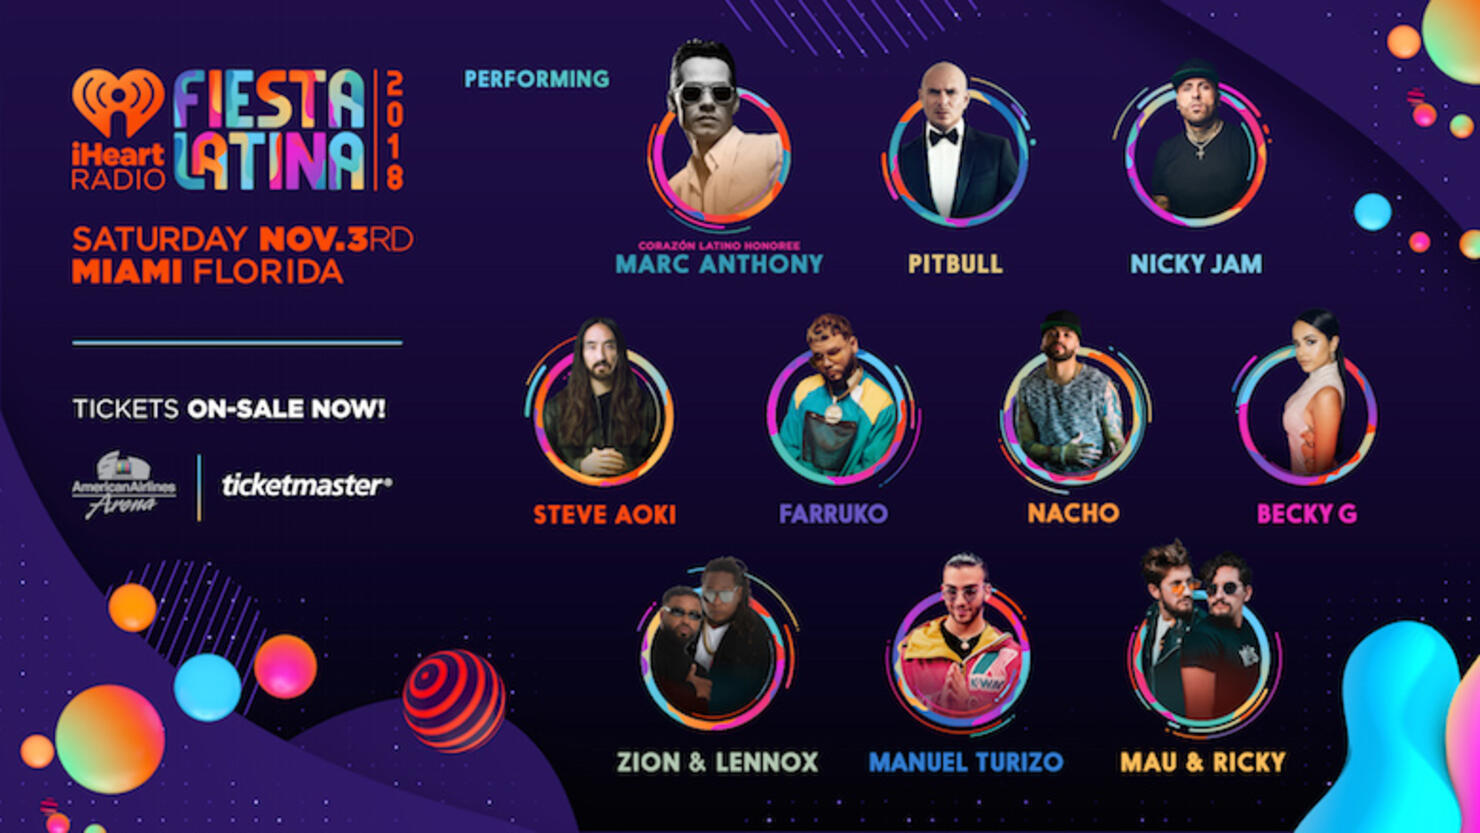 Marc Anthony, Manuel Turizo & More Join iHeartRadio Fiesta Latina